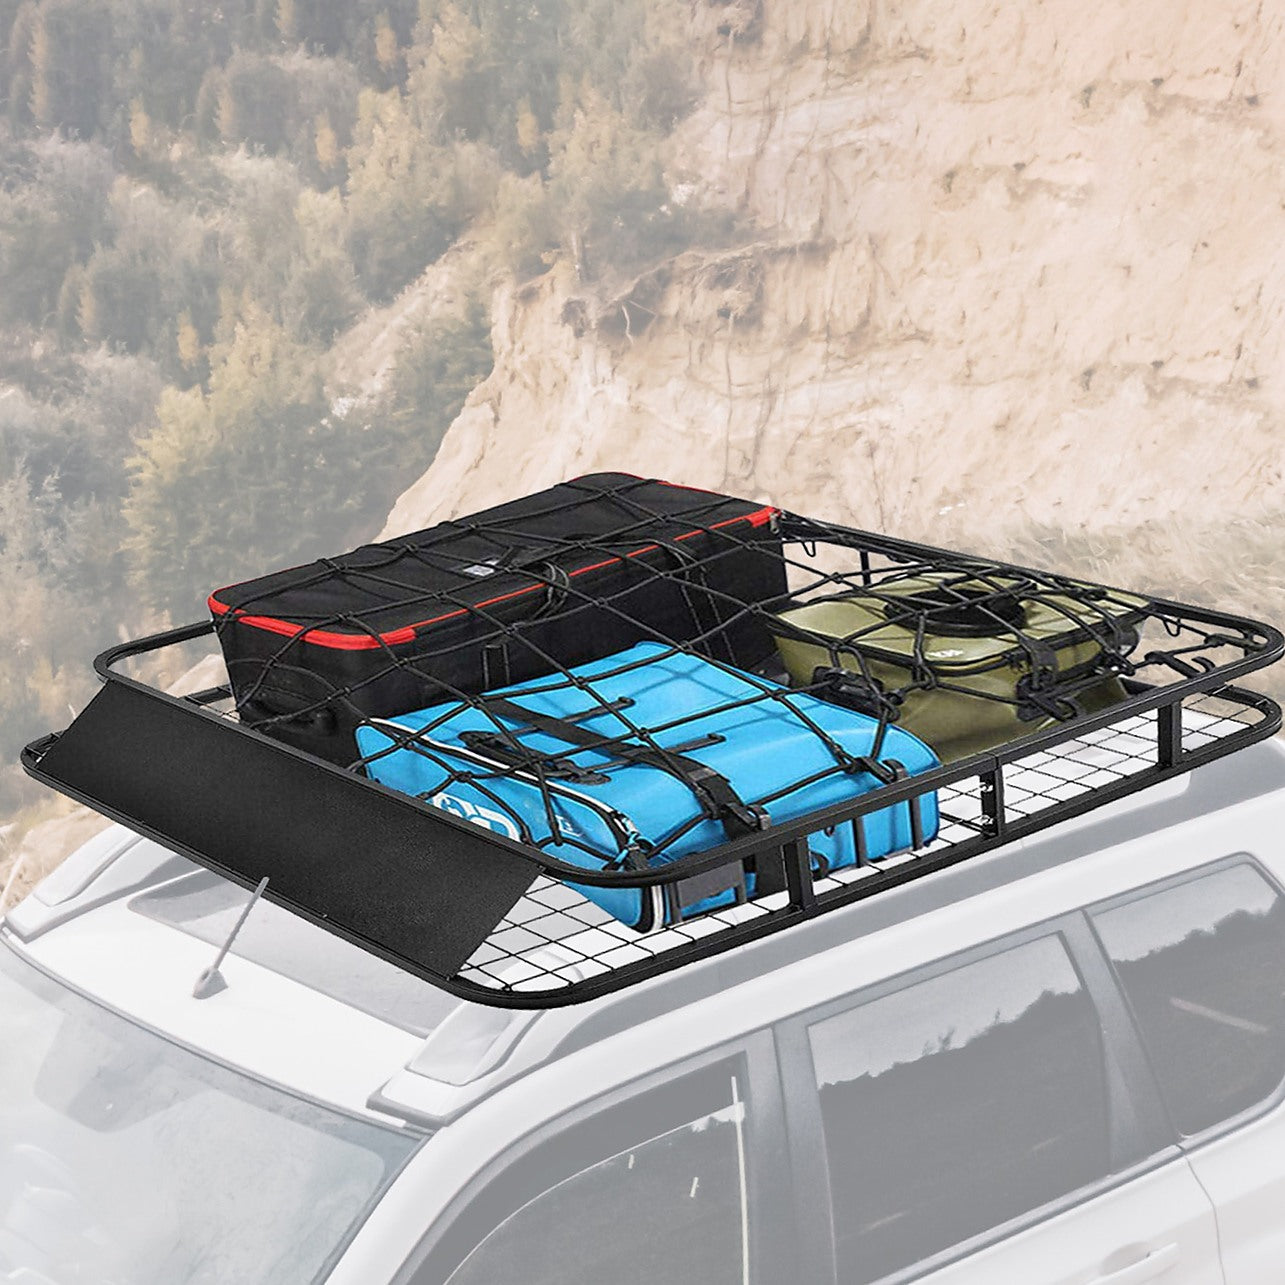 Universal Roof Rack Basket - Car Luggage Carrier Steel Cage